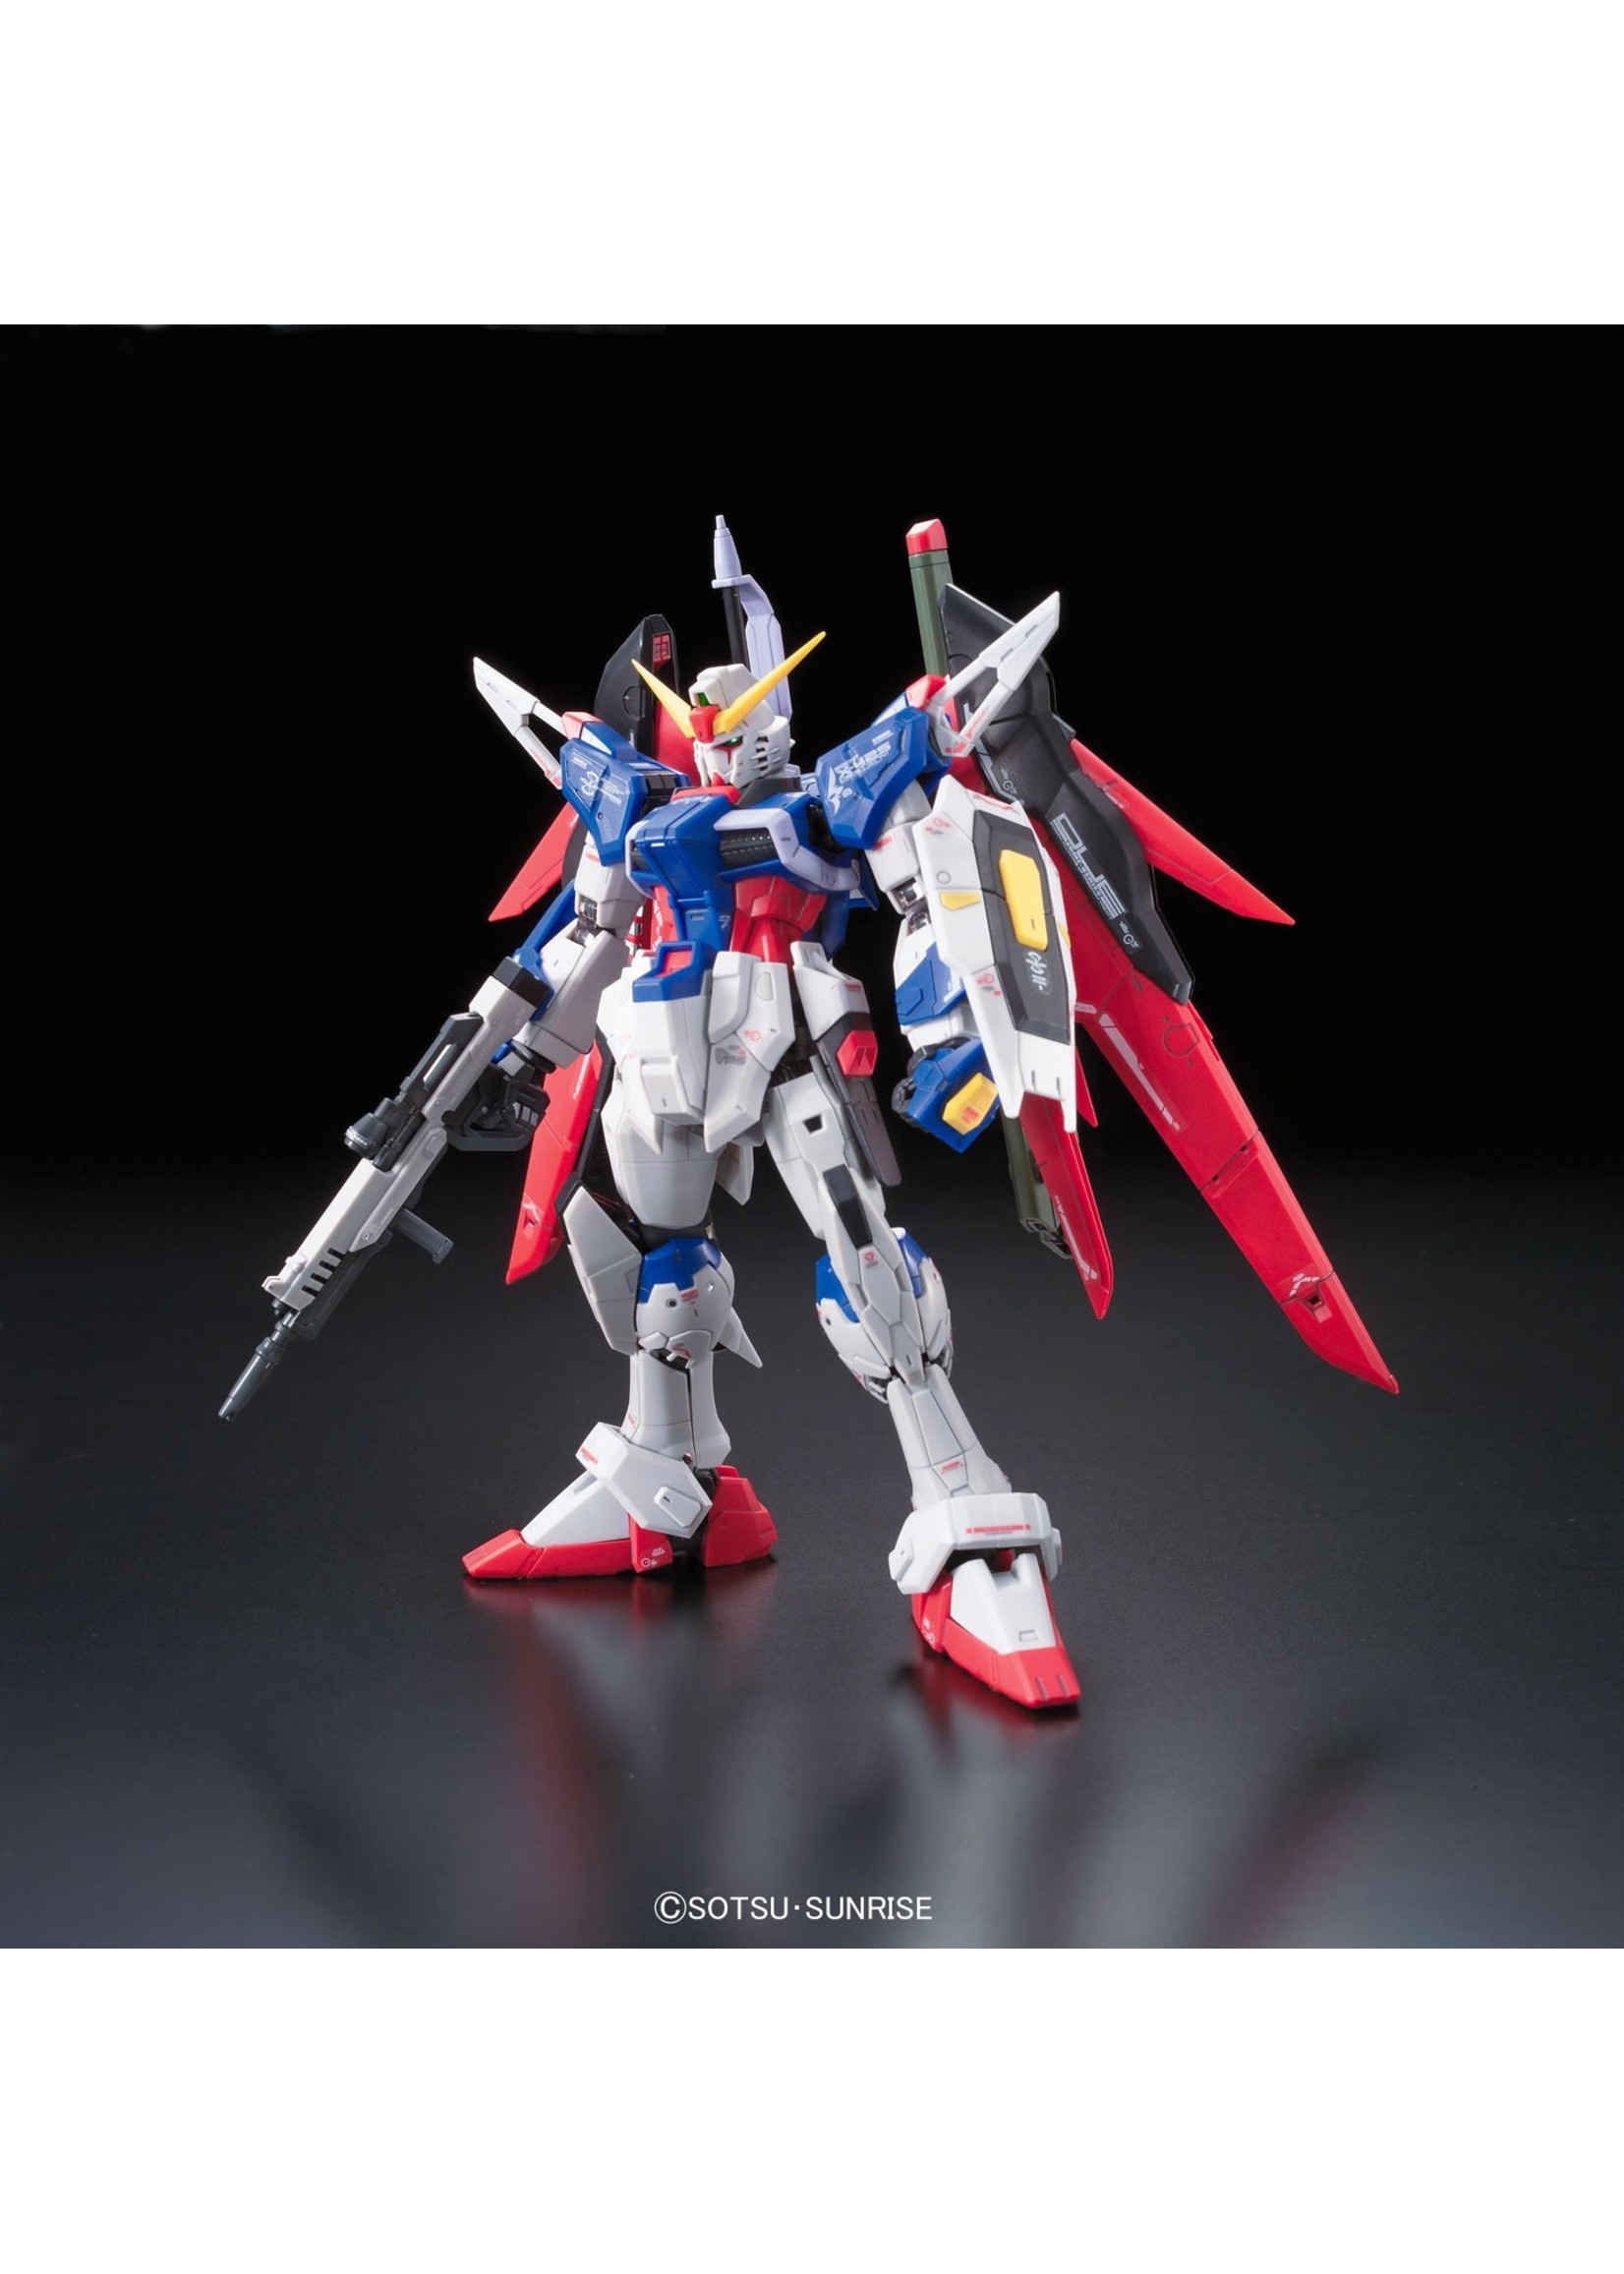  Bandai Hobby #10 Zeta Gundam Scale 1/144 Real Grade Figure :  Toys & Games